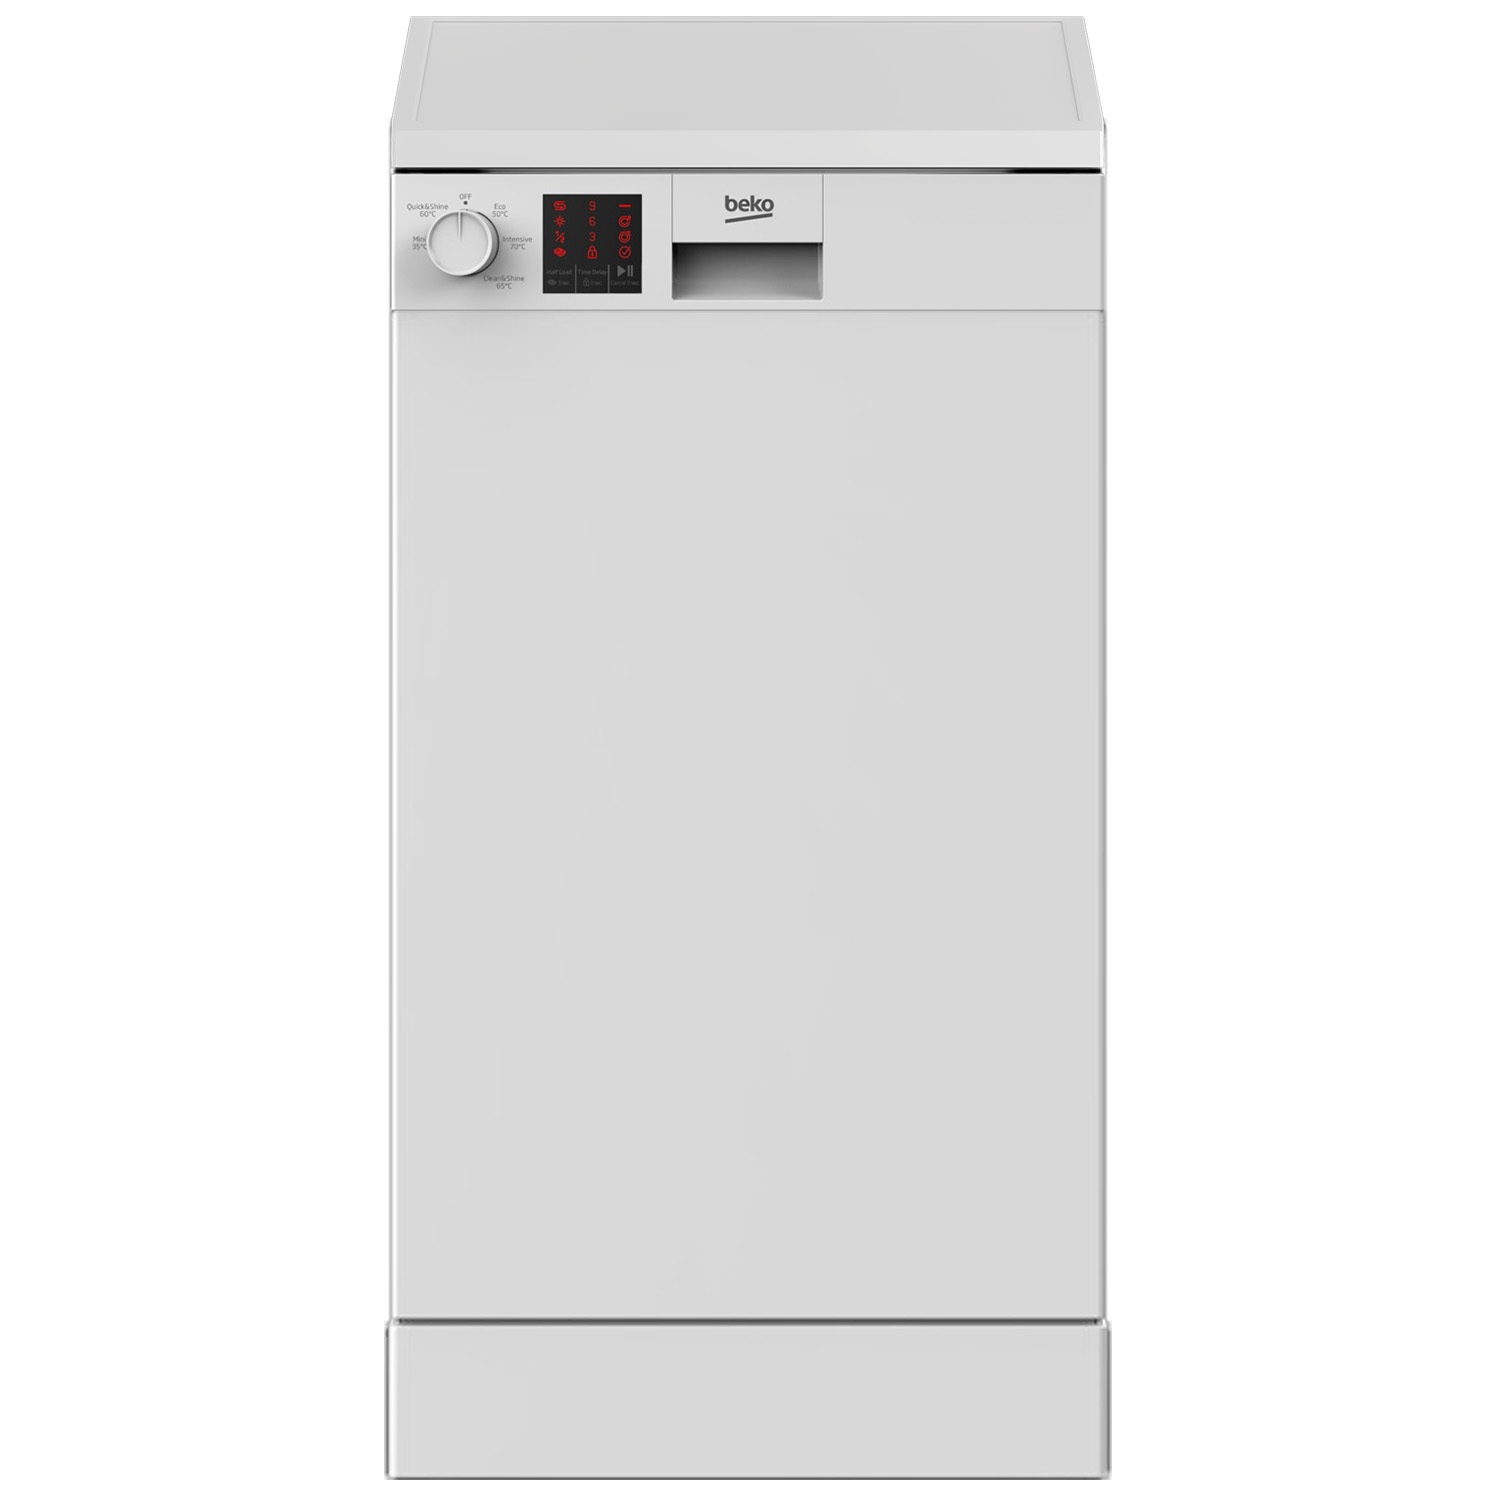 Beko DVS05C20W Slimline Dishwasher - White - 10 Place Settings - 0